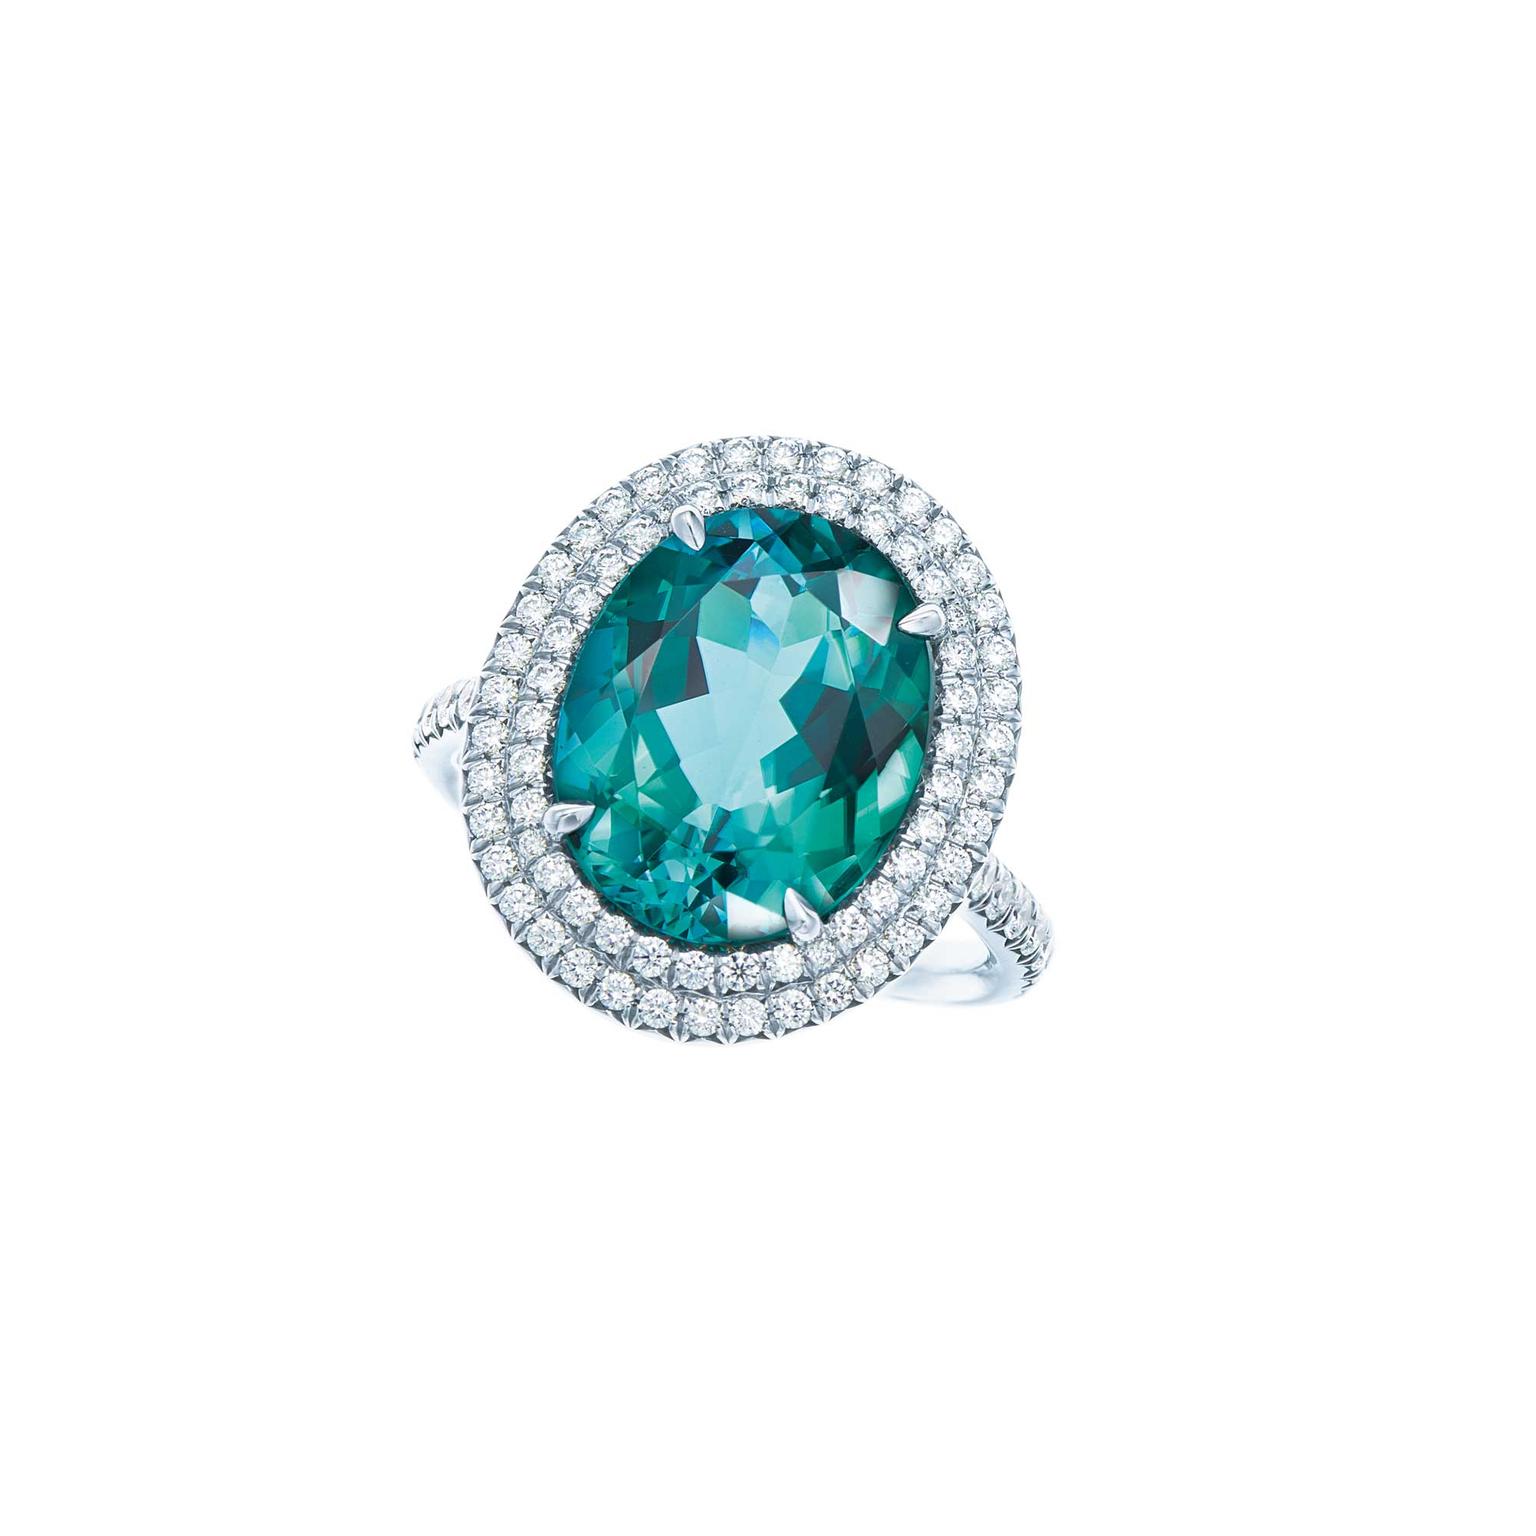 Tiffany green tourmaline ring